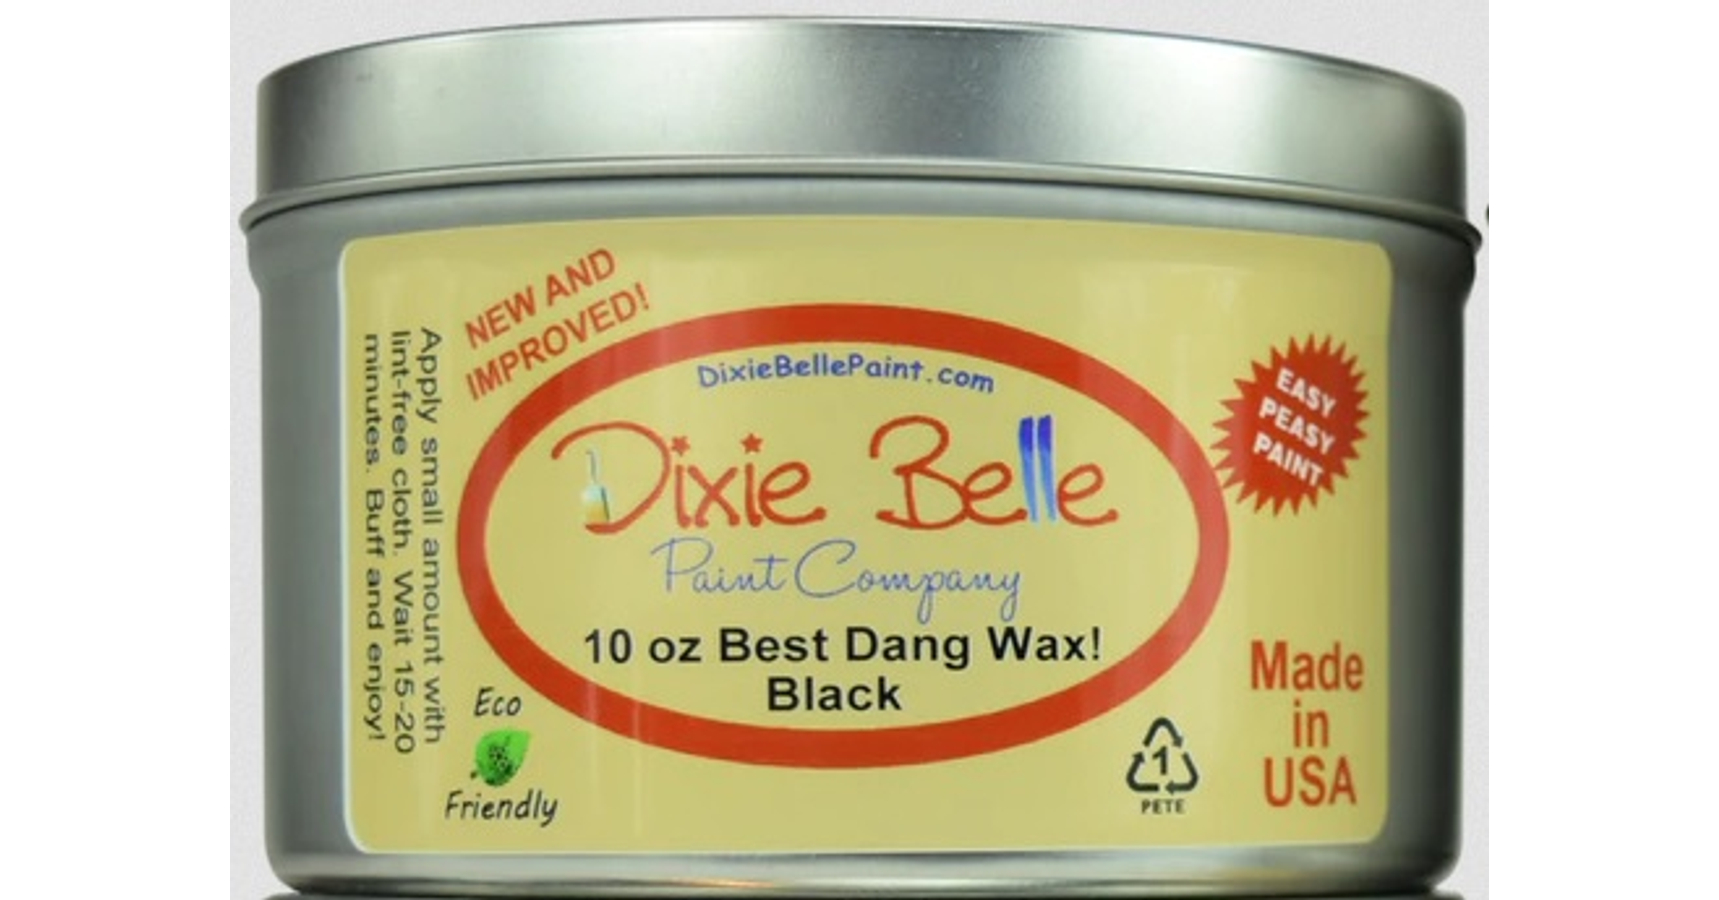 Best Dang Wax - Dixie Belle 10 oz / Clear